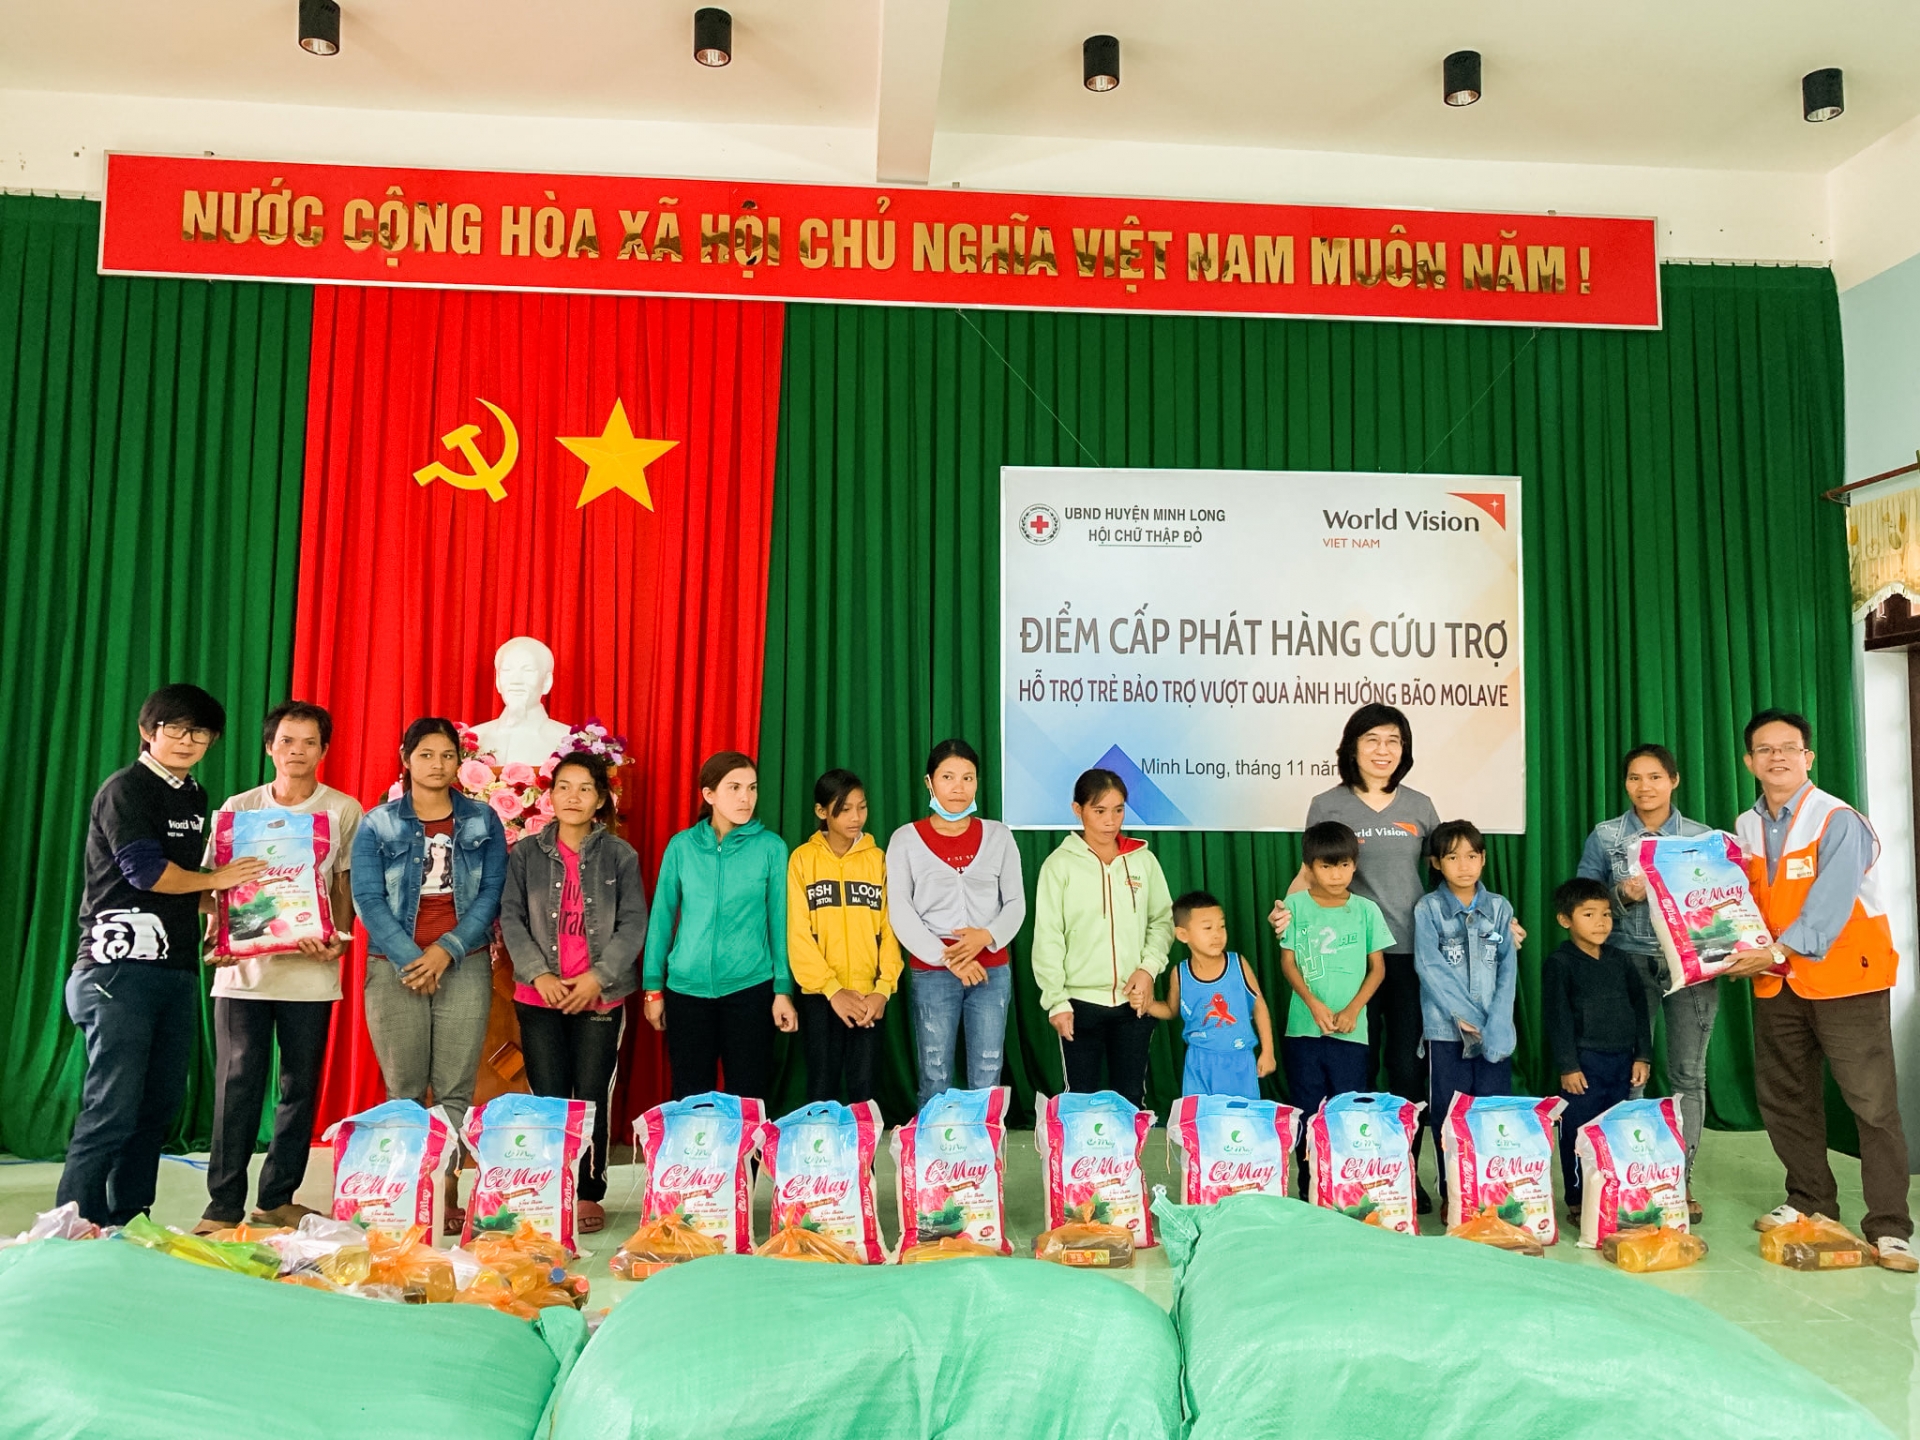 World vision vietnam supports vietnam’s disaster response